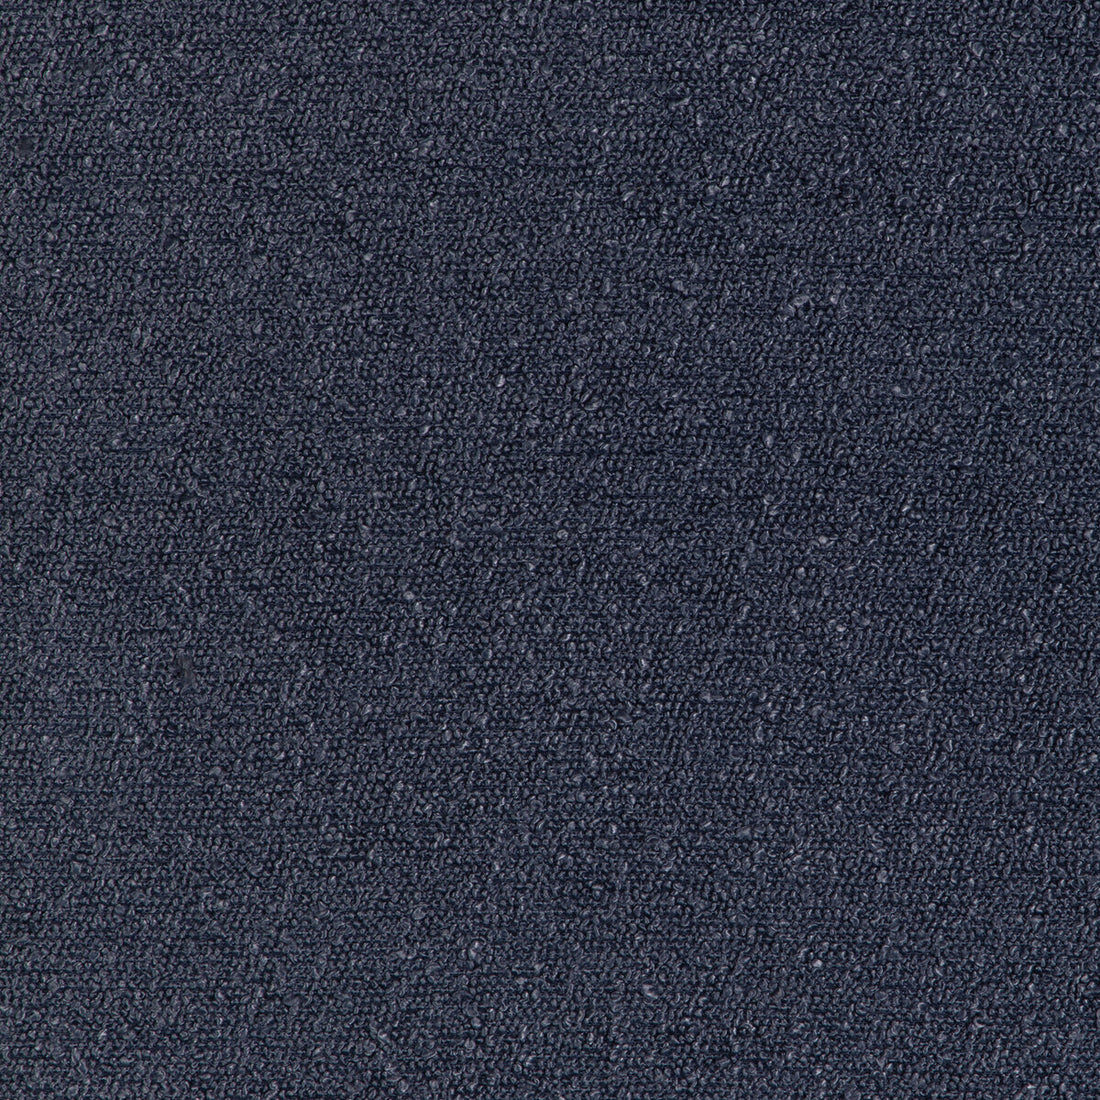 Kravet Smart fabric in 36987-50 color - pattern 36987.50.0 - by Kravet Smart